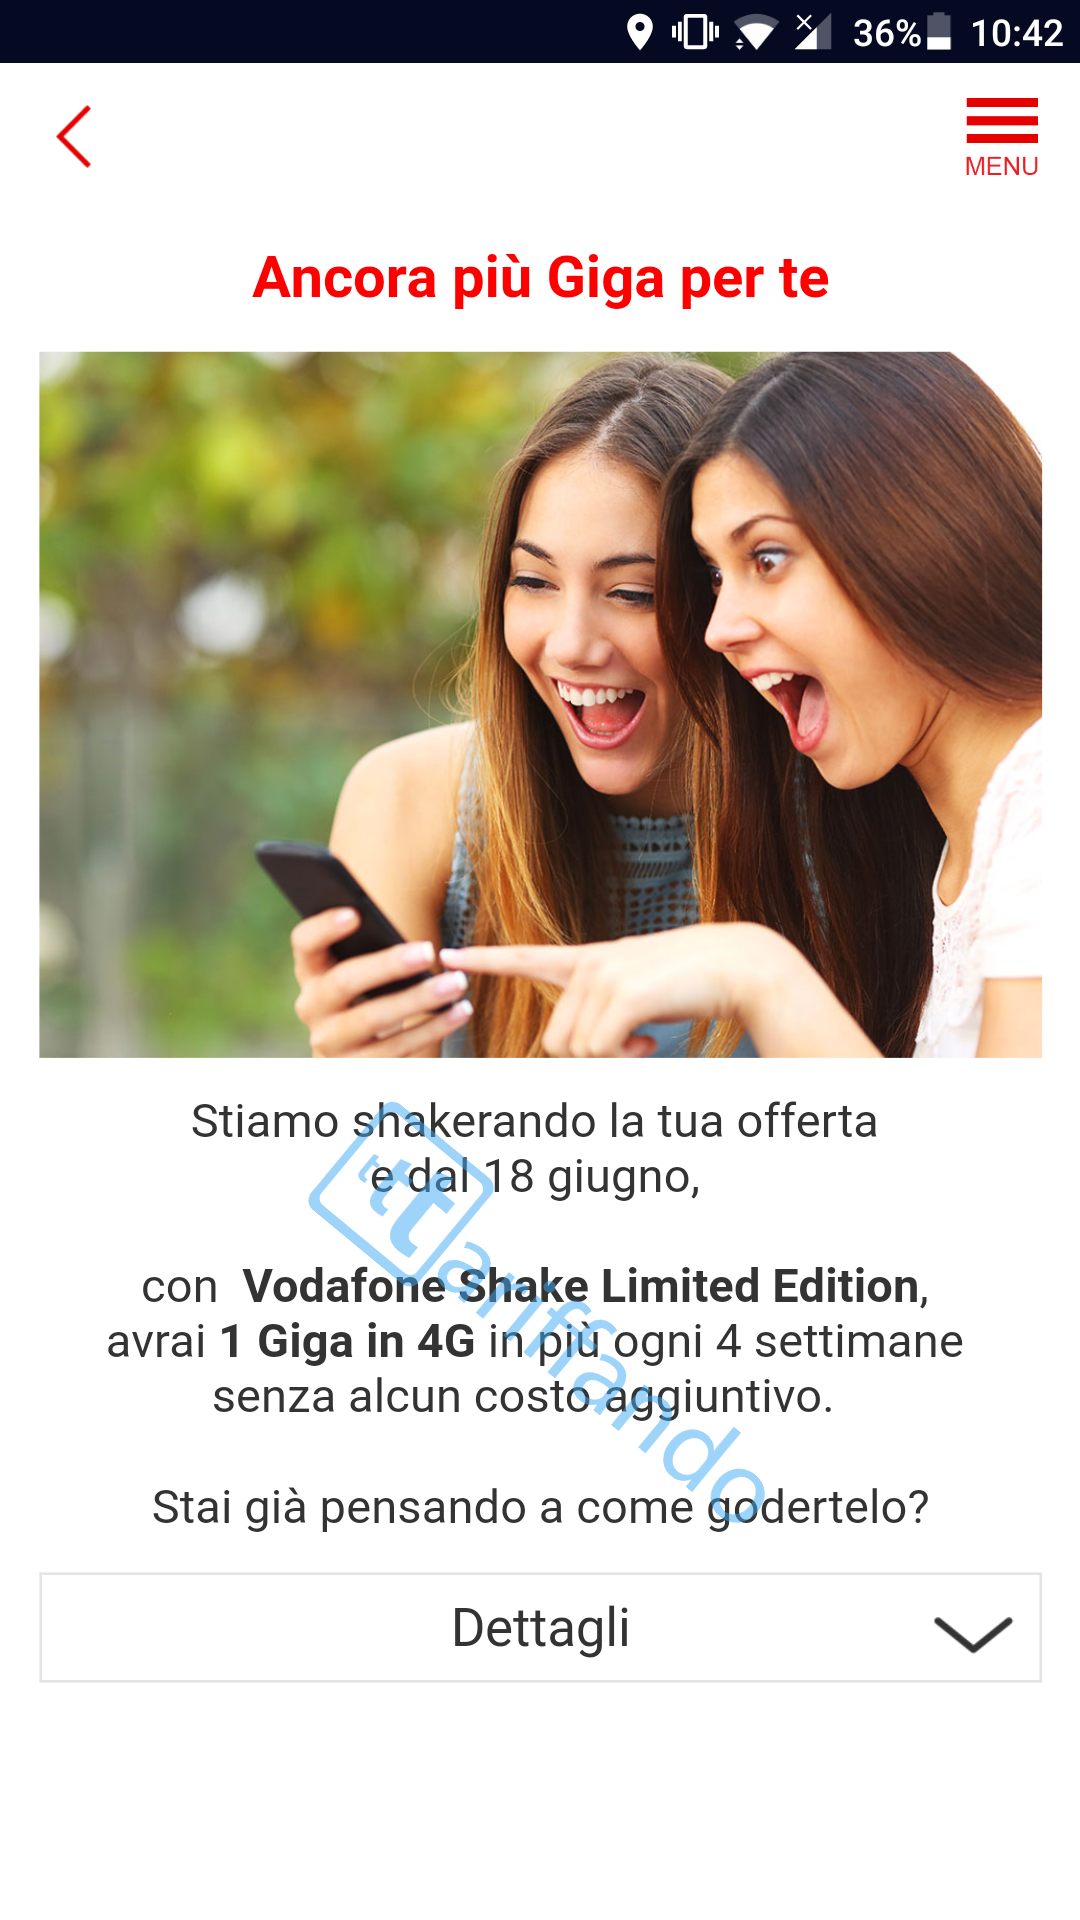 Vodafone Shake Limited Edition giga gratis